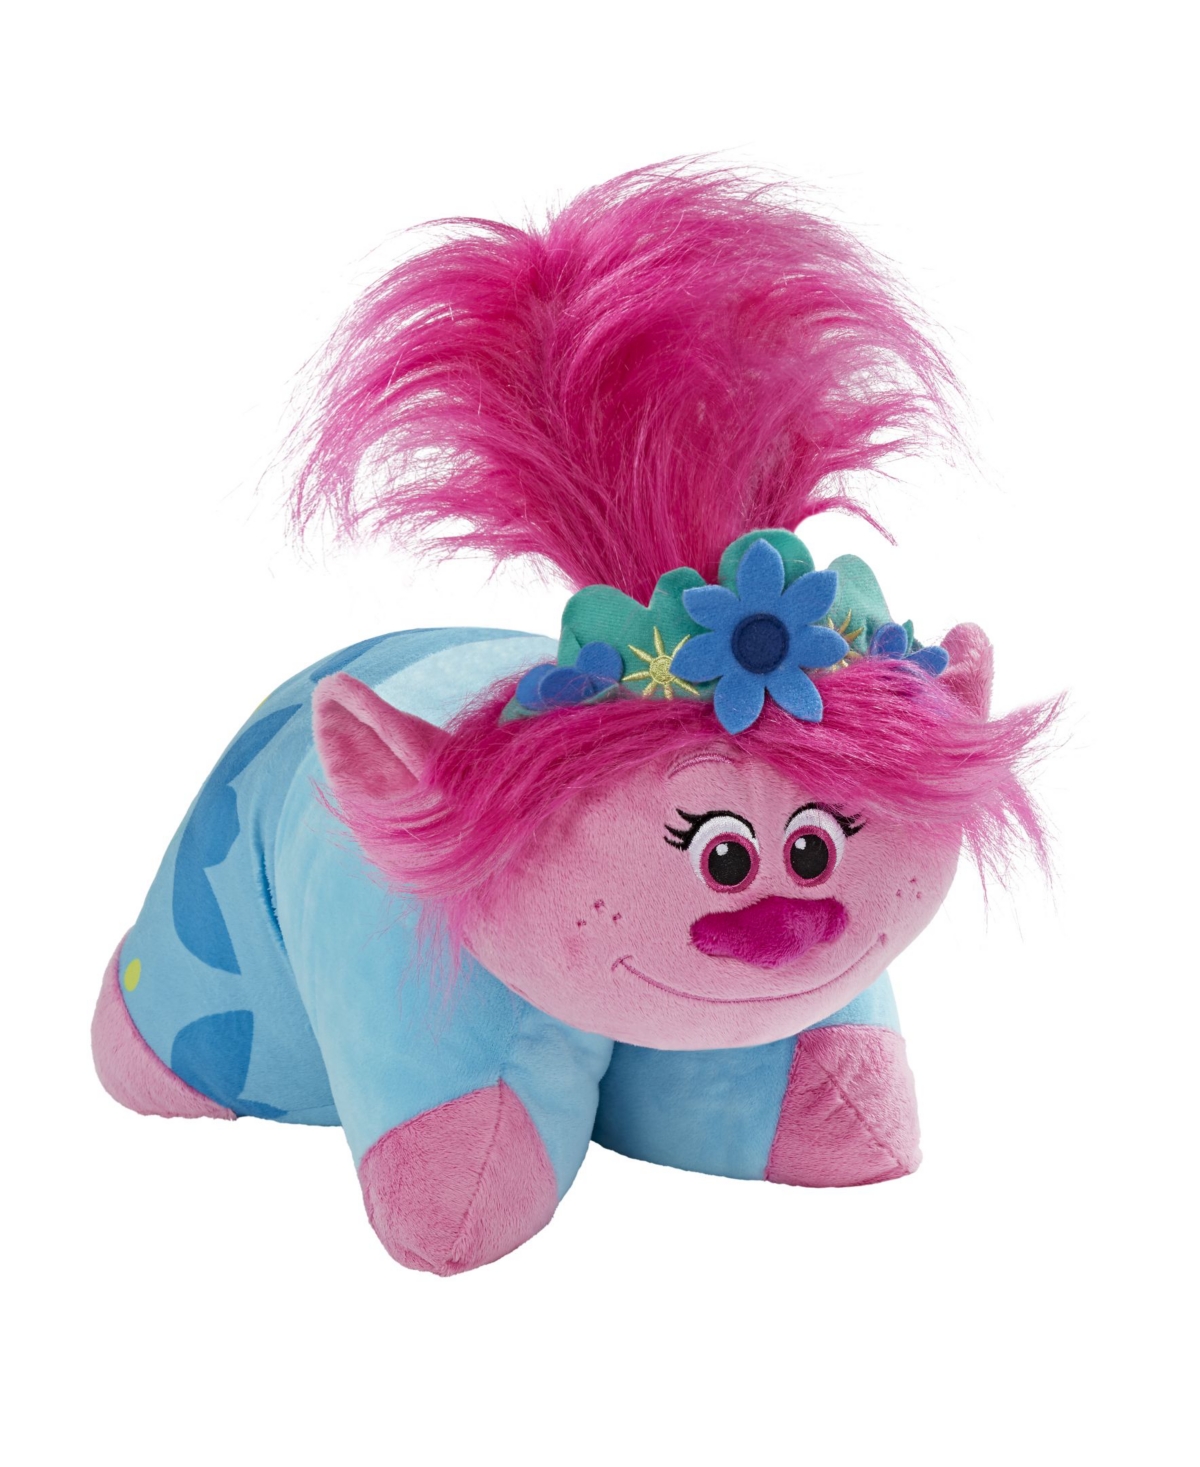 Pillow Pets Dreamworks Trolls 2 Poppy Stuffed Animal Plush Toy In Pink